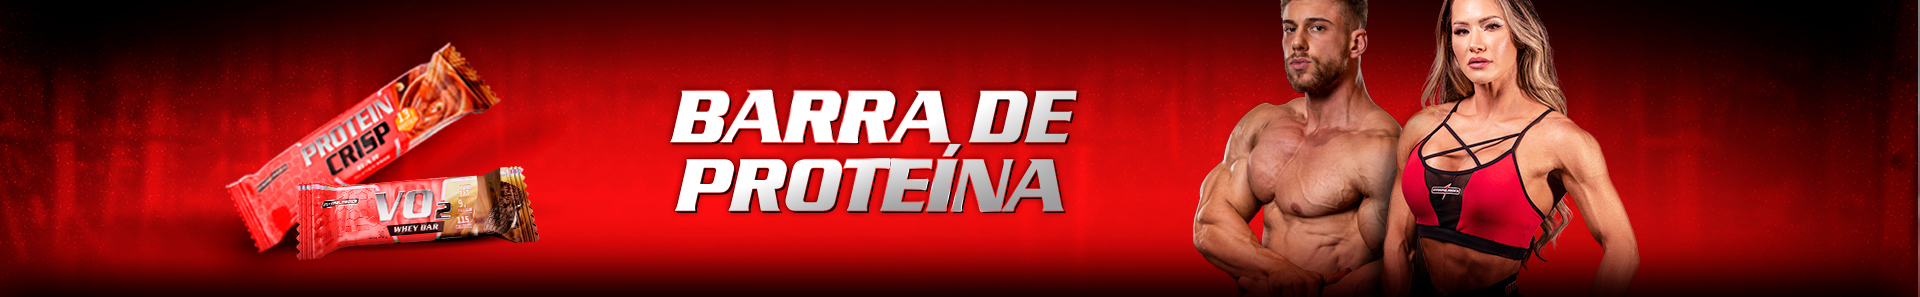 Banner Integralmédica - Barra de Proteína - Desktop